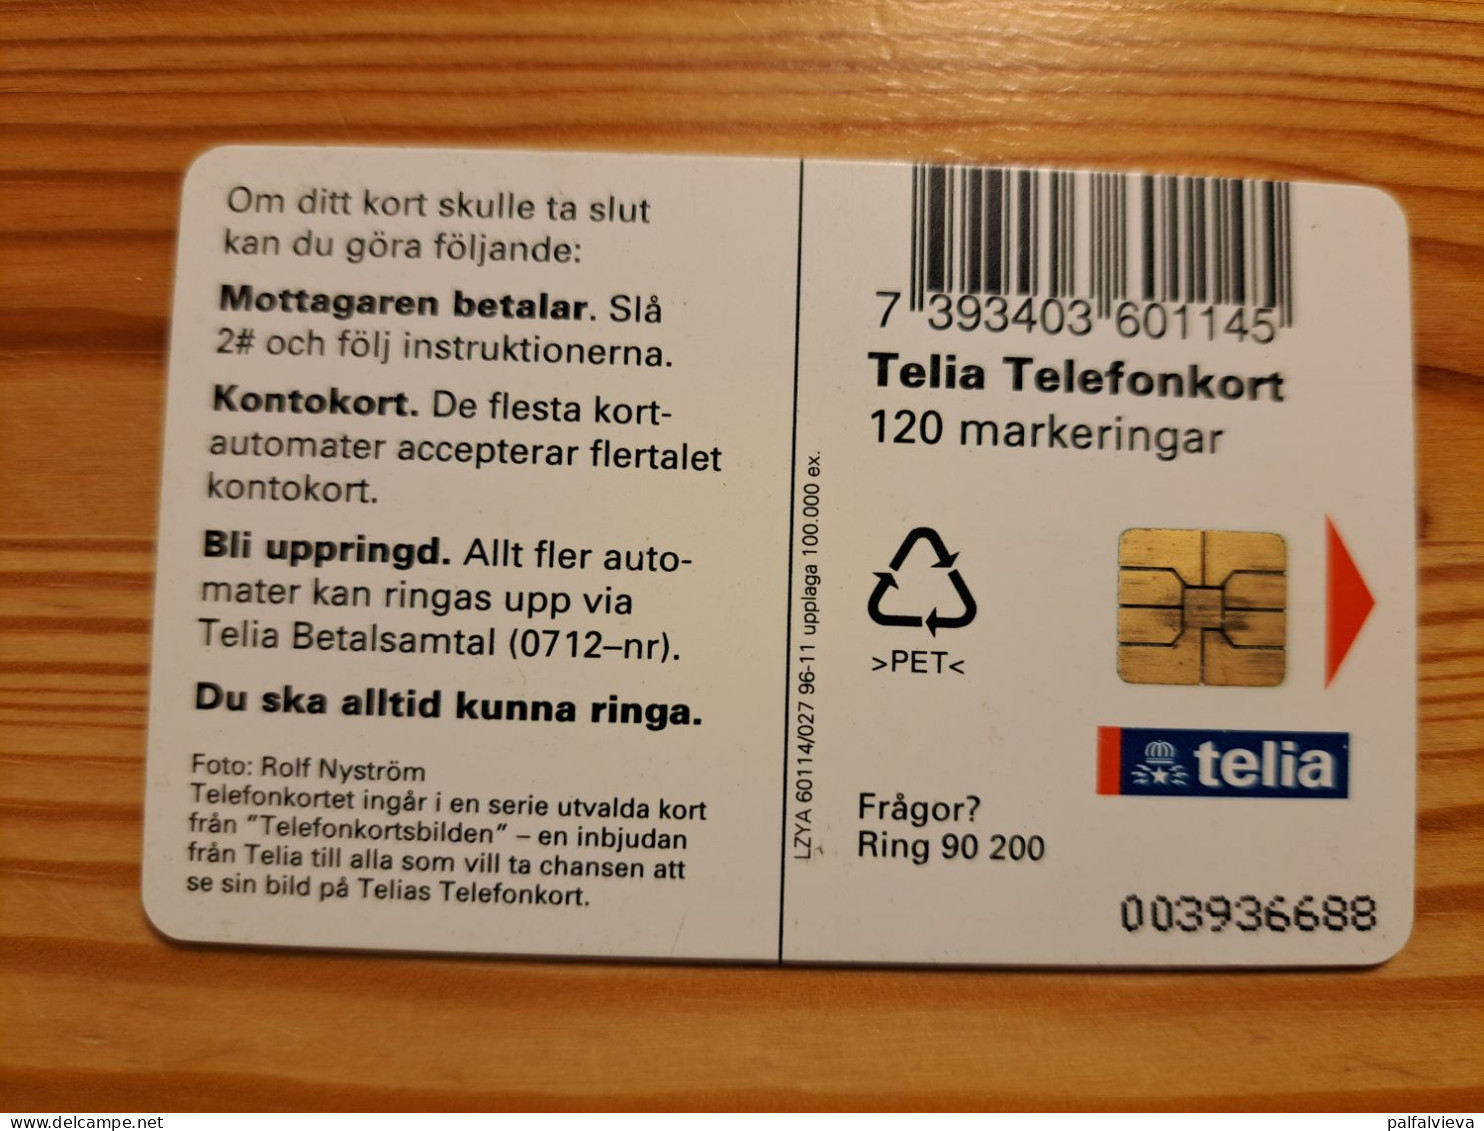 Phonecard Sweden - Horse - Suède